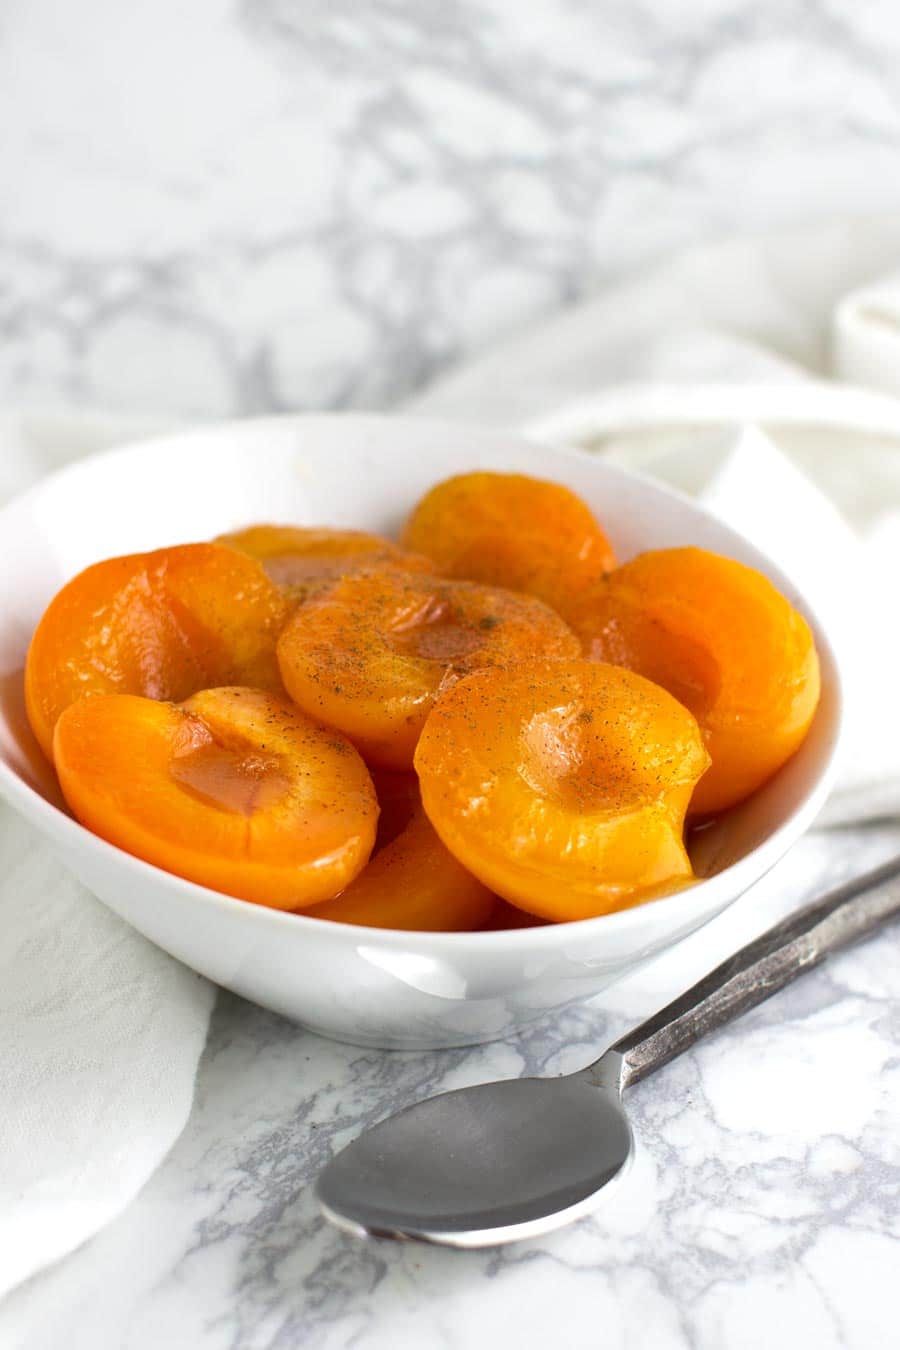 Sauteed Apricots recipe from acleanplate.com #paleo #aip #autoimmuneprotocol